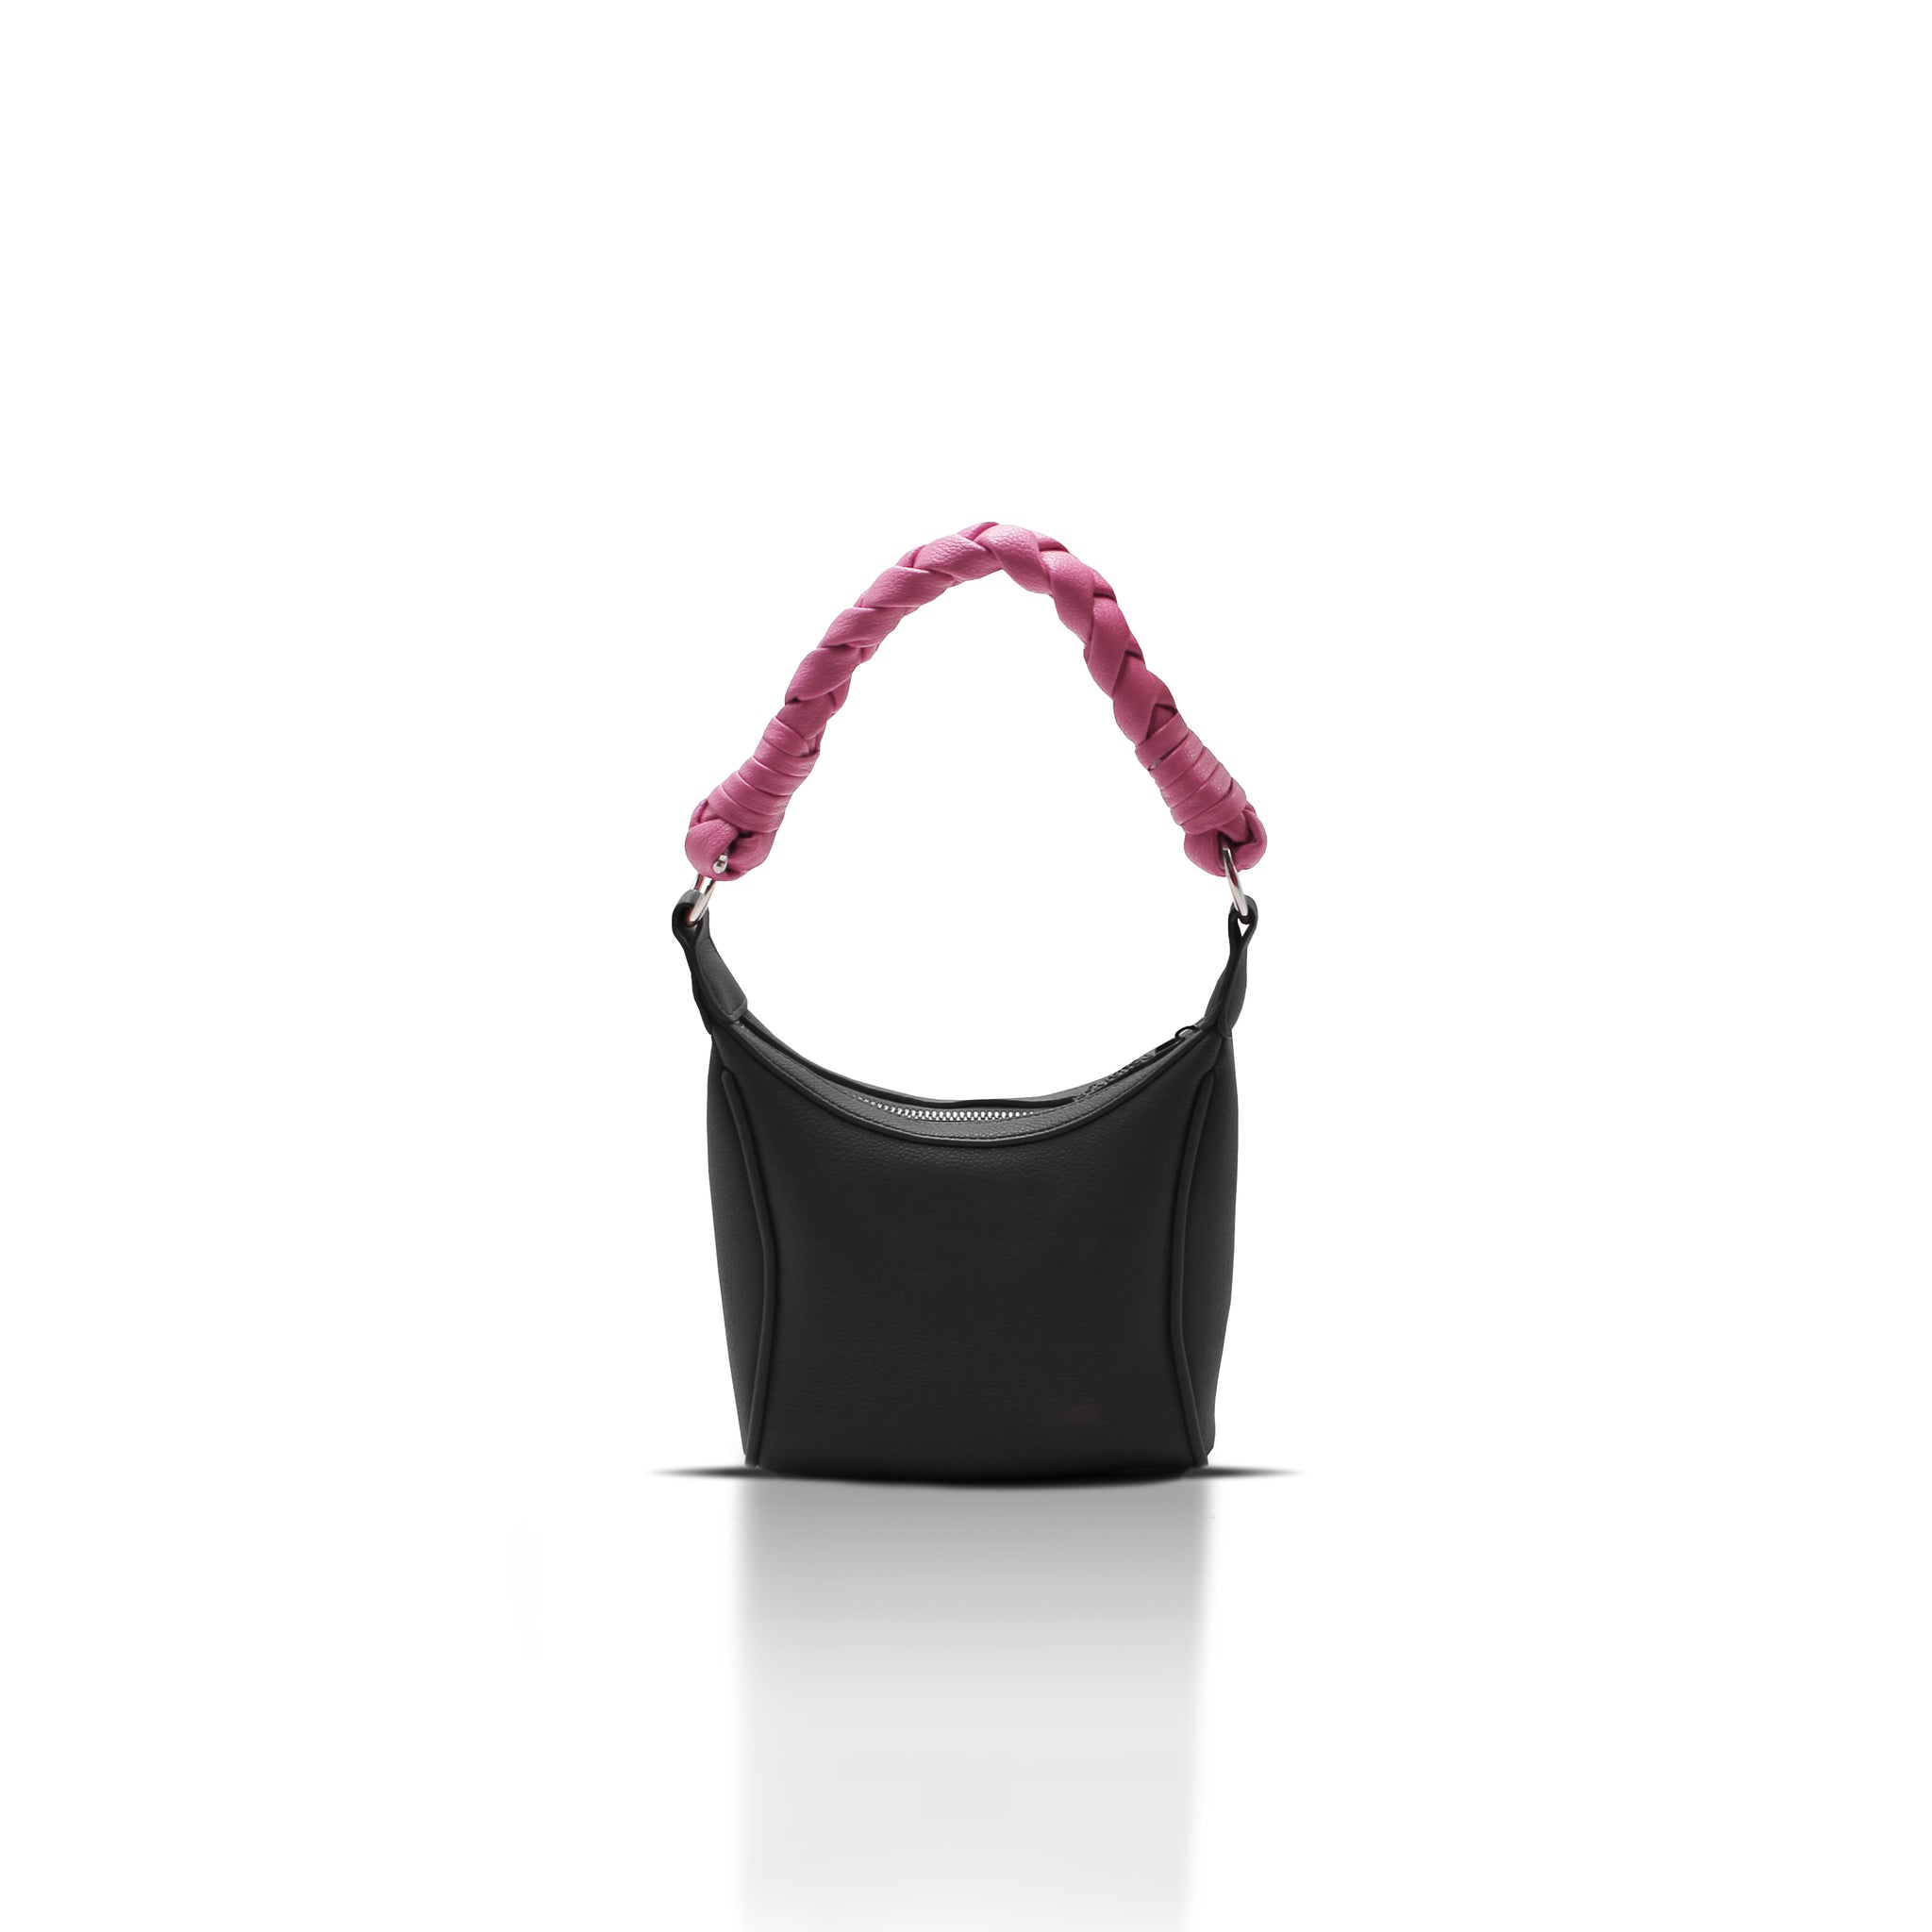 Mini bag in black / pink eco leather